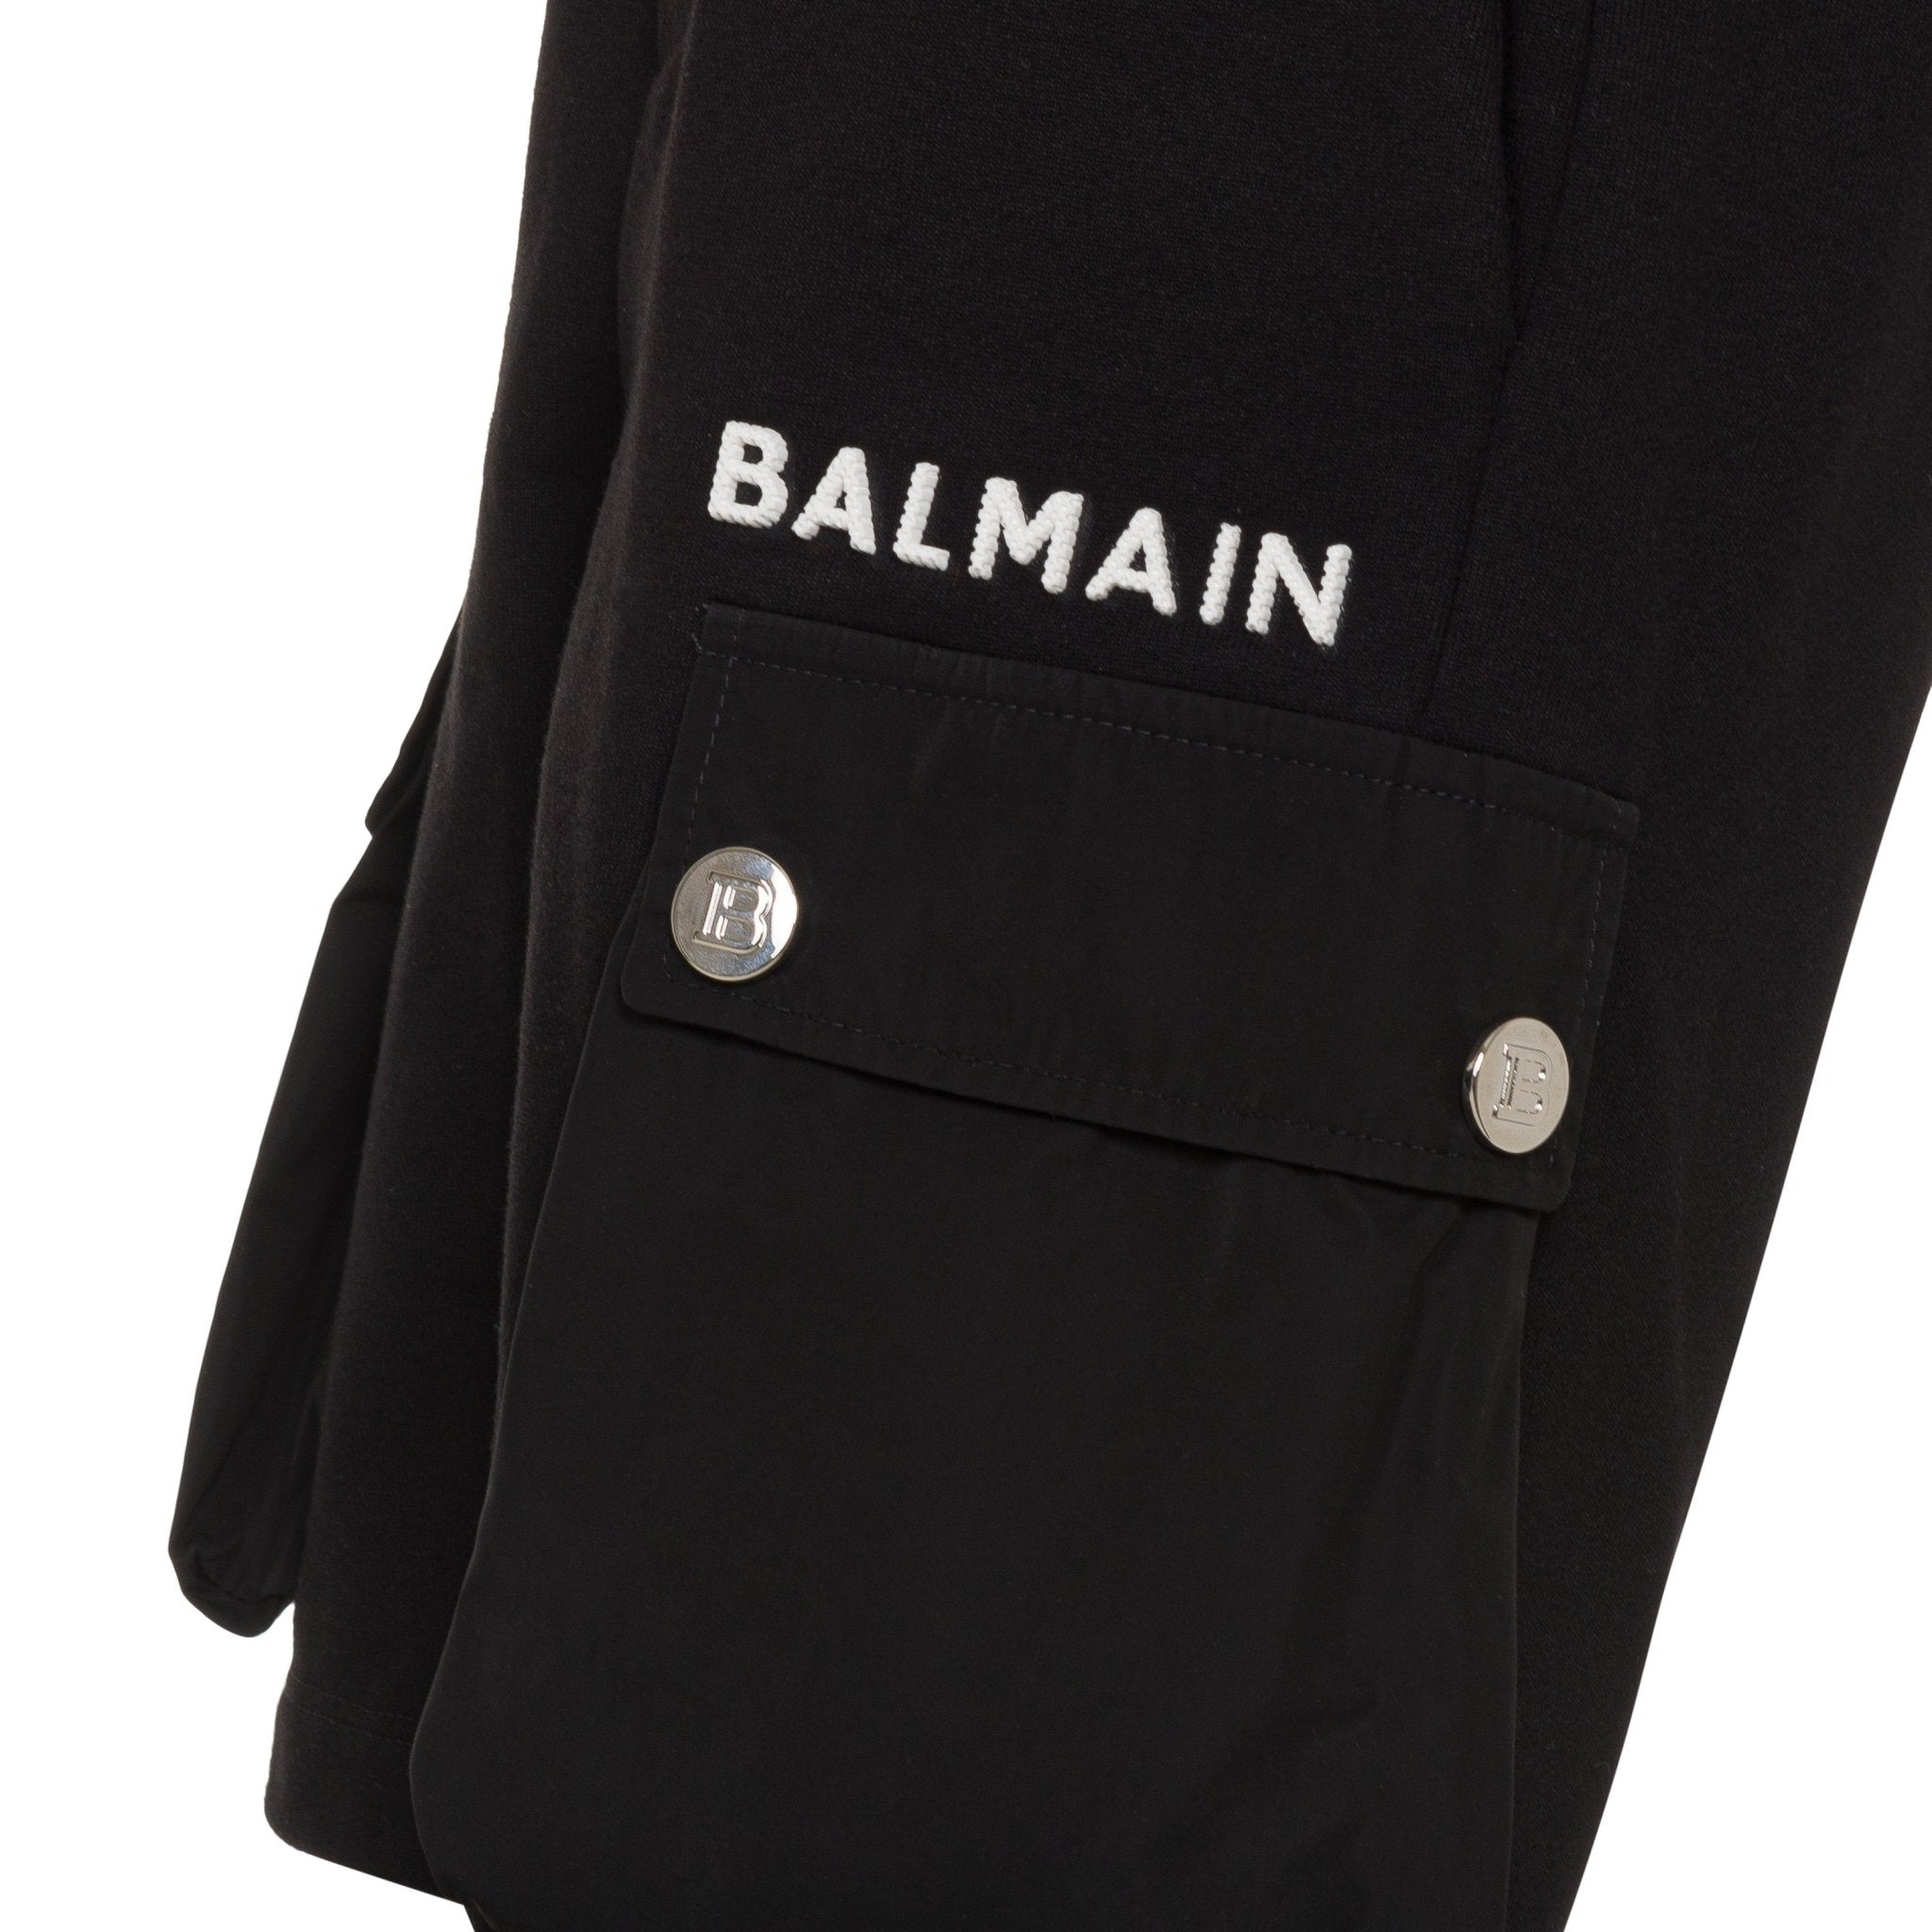 Balmain Boys Logo Embroidered Shorts Black - Balmain KidsShorts